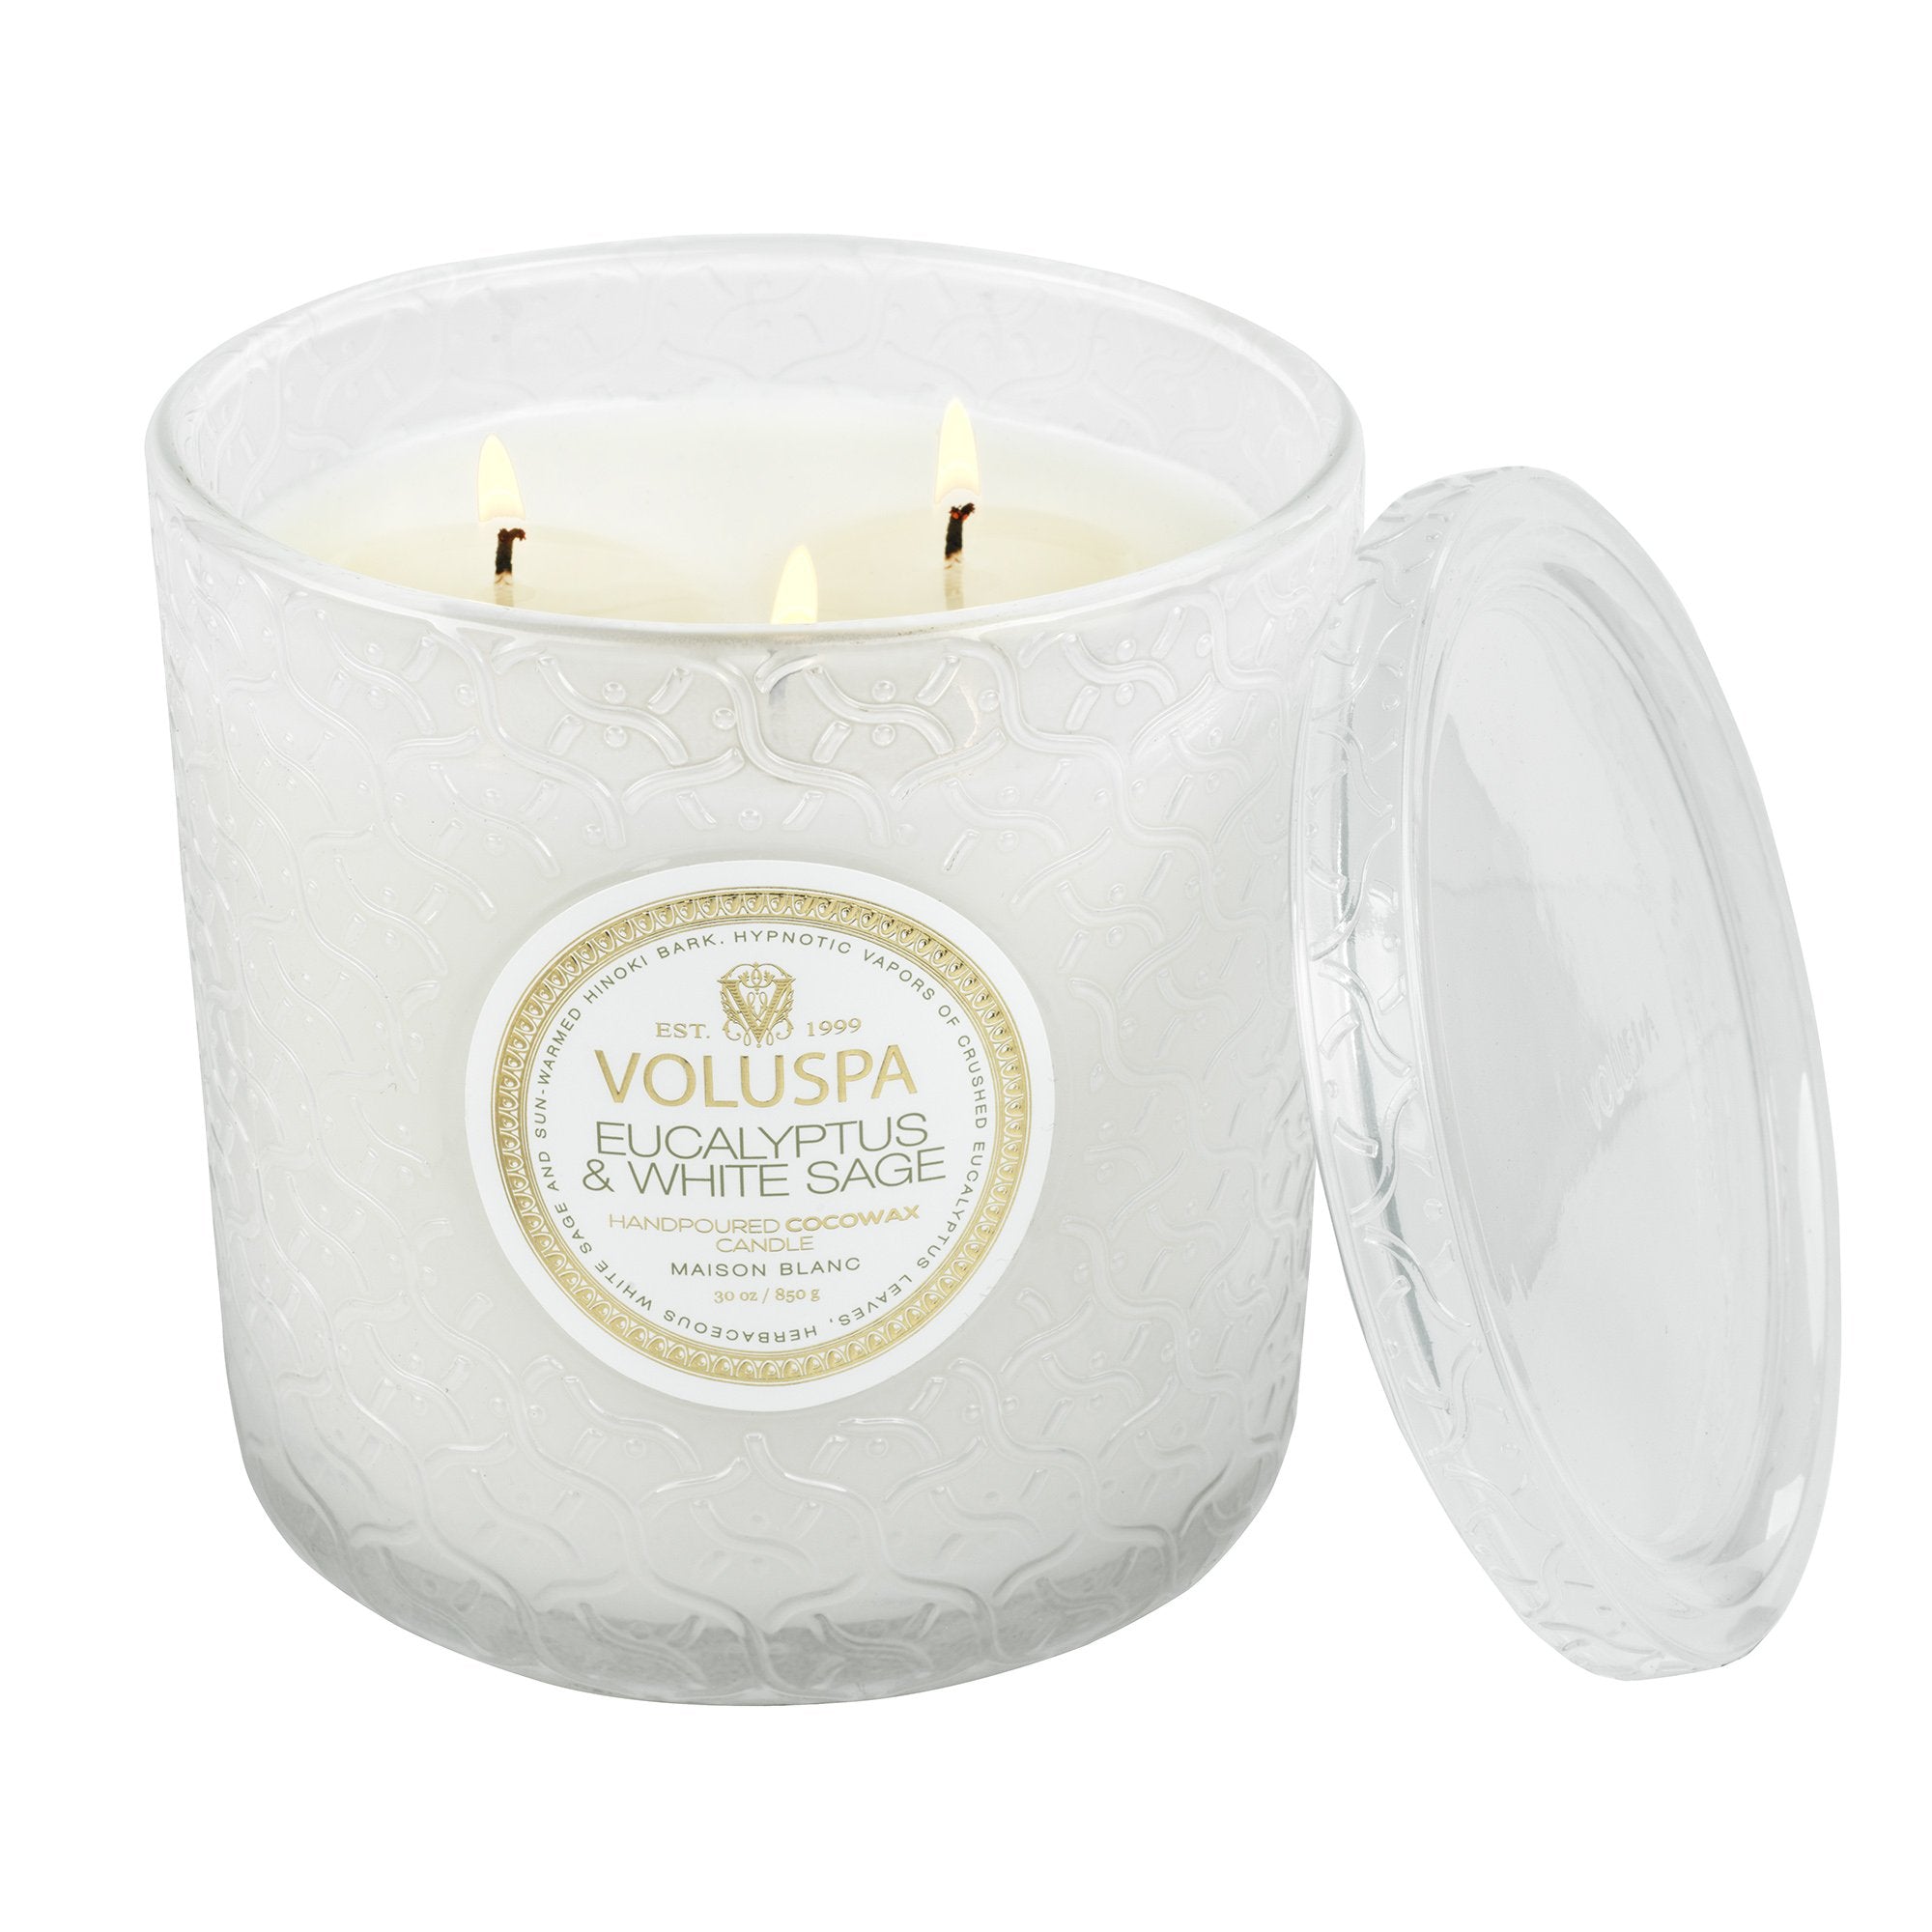 Eucalyptus & White Sage - Luxe Candle